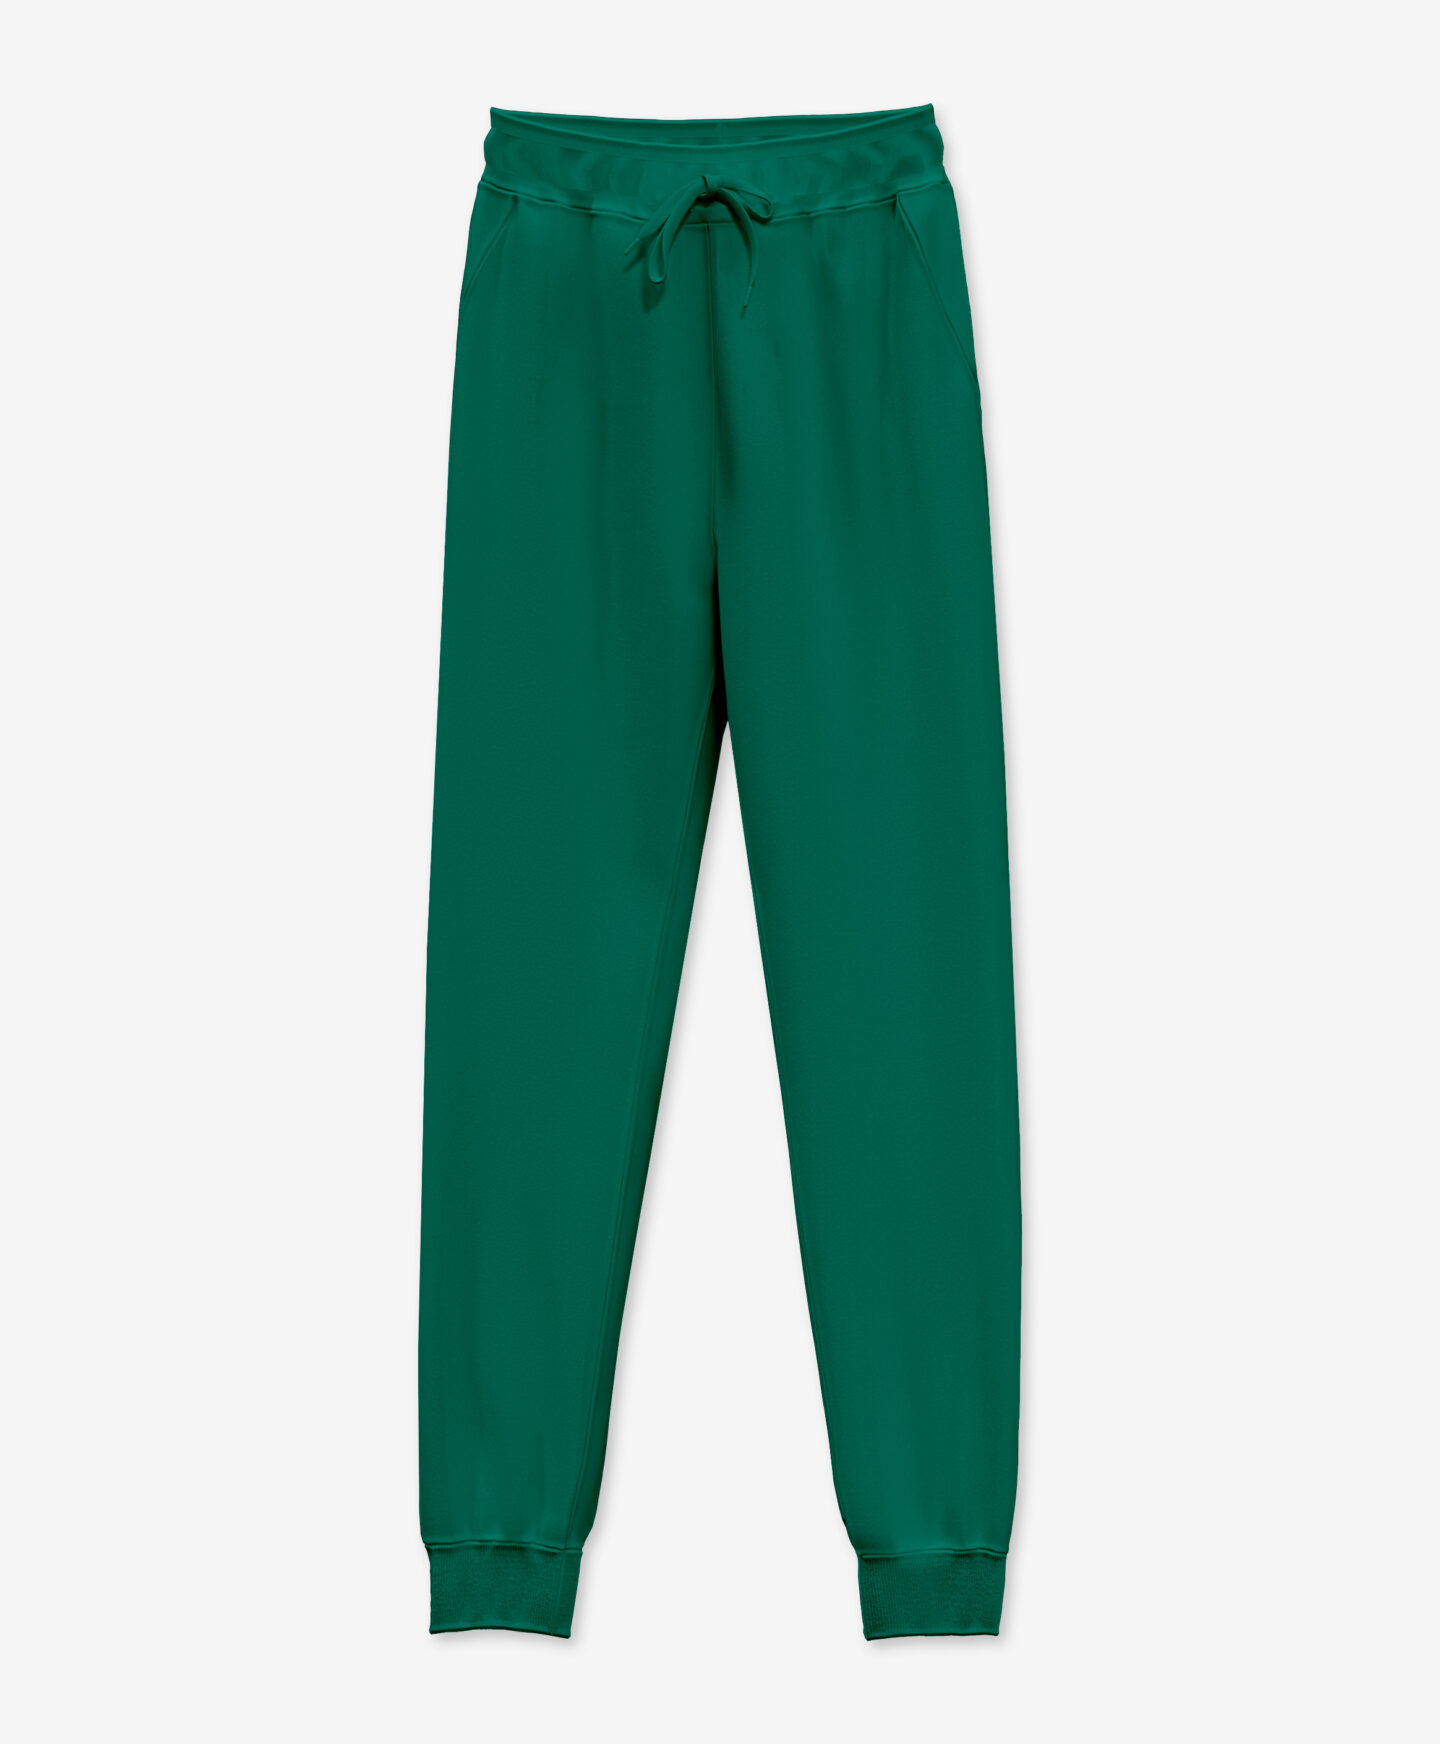 pantaloni tuta da uomo verdi